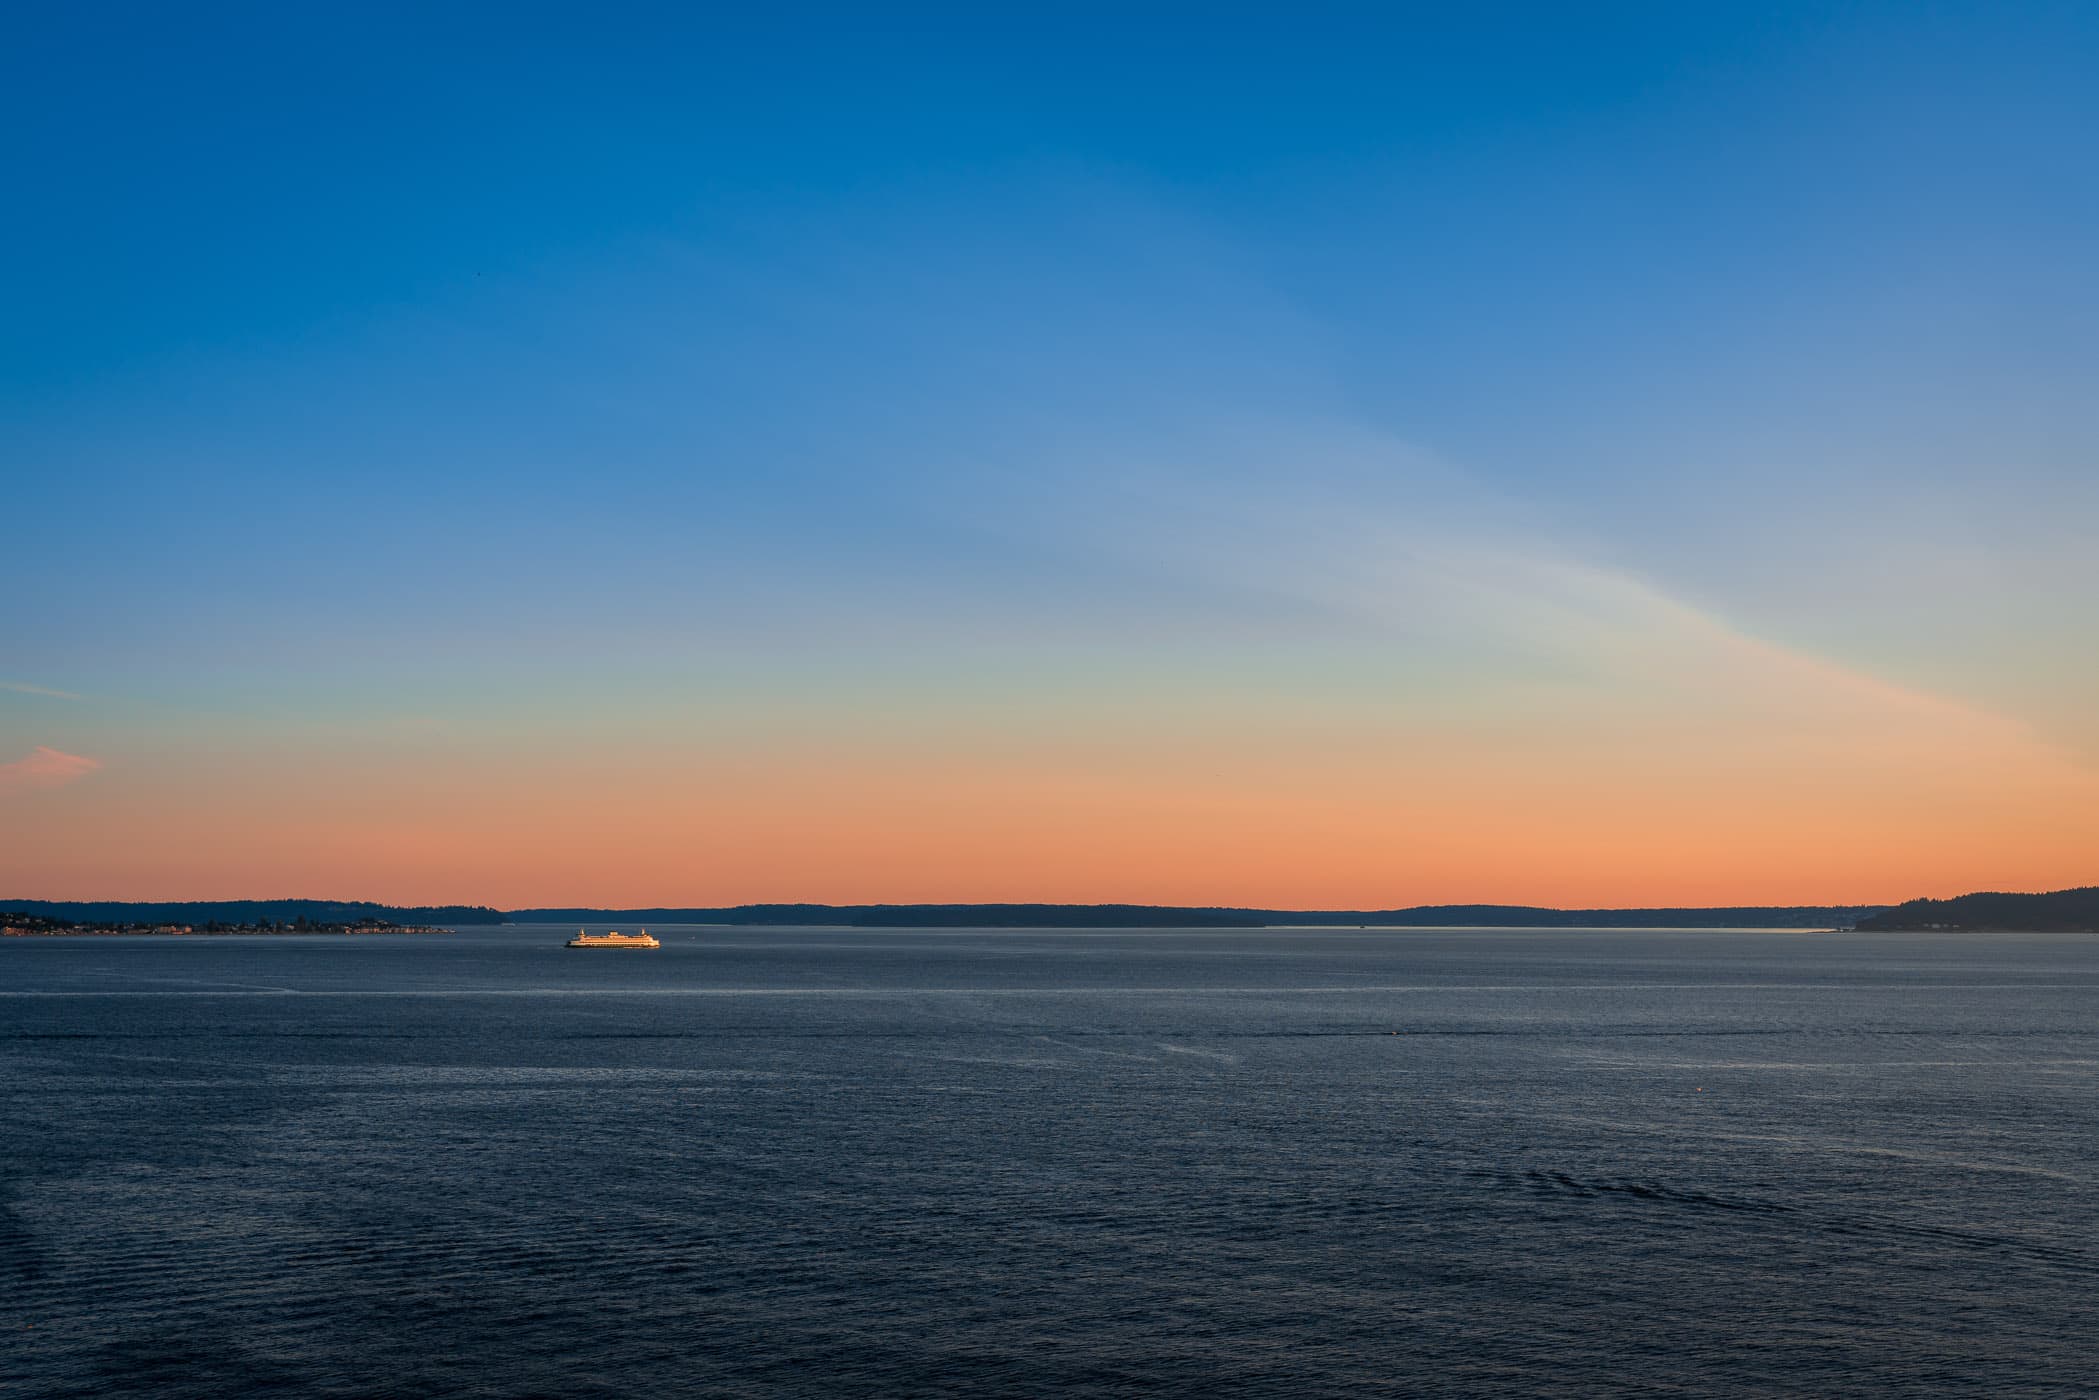 The sun sets on the Seattle-Bainbridge ferry as it crosses Puget Sound.